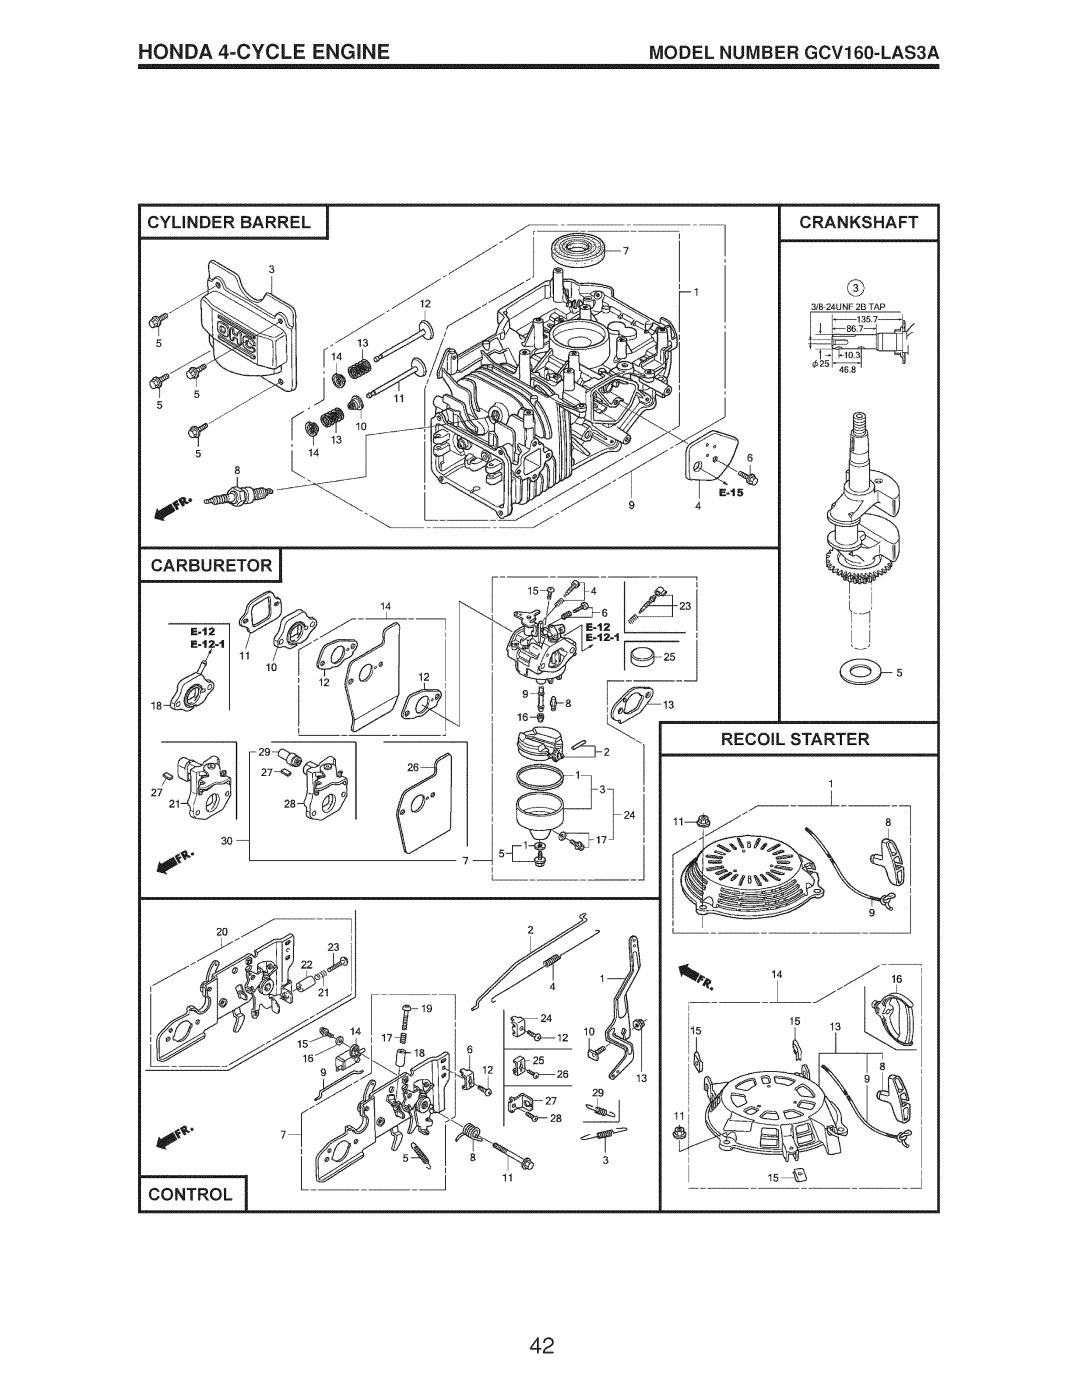 Craftsman Gcv160 manual HONDA 4-CYCLEENGINE, MODEL NUMBER GCV160-LAS3A, Cylinder Barrel, Carburetor, Crankshaft, 0525 